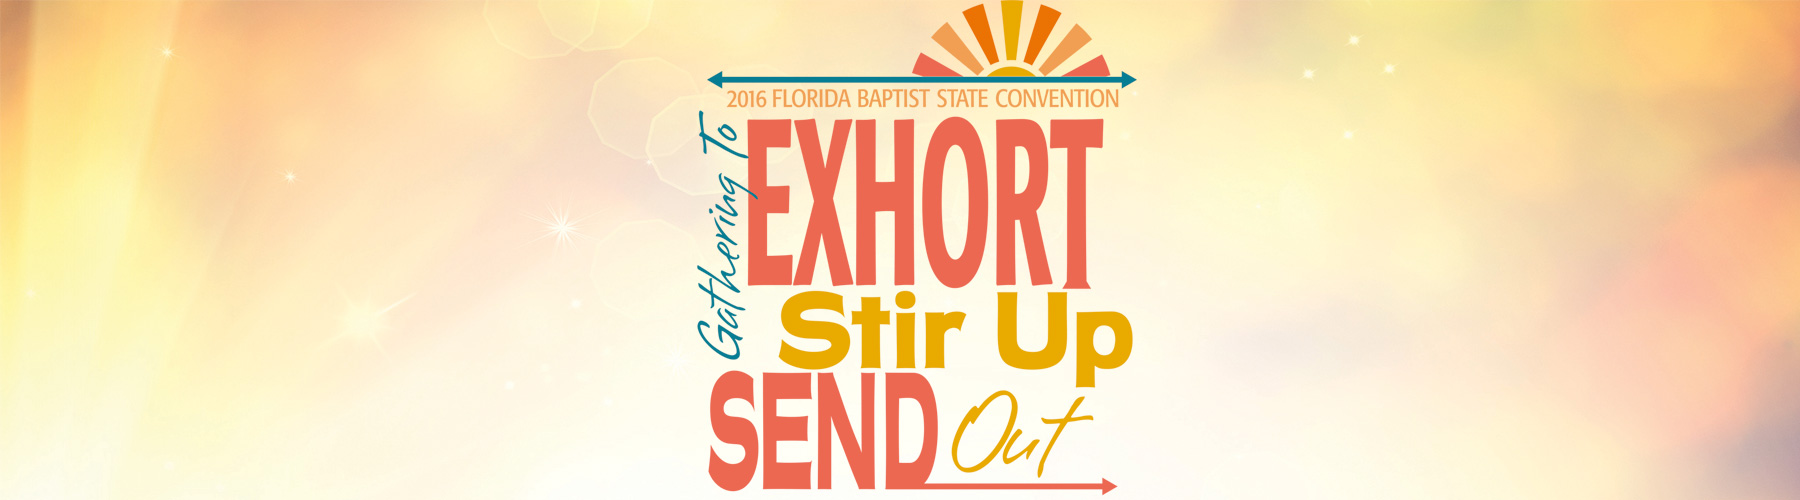 2016 Florida Baptist State Convention